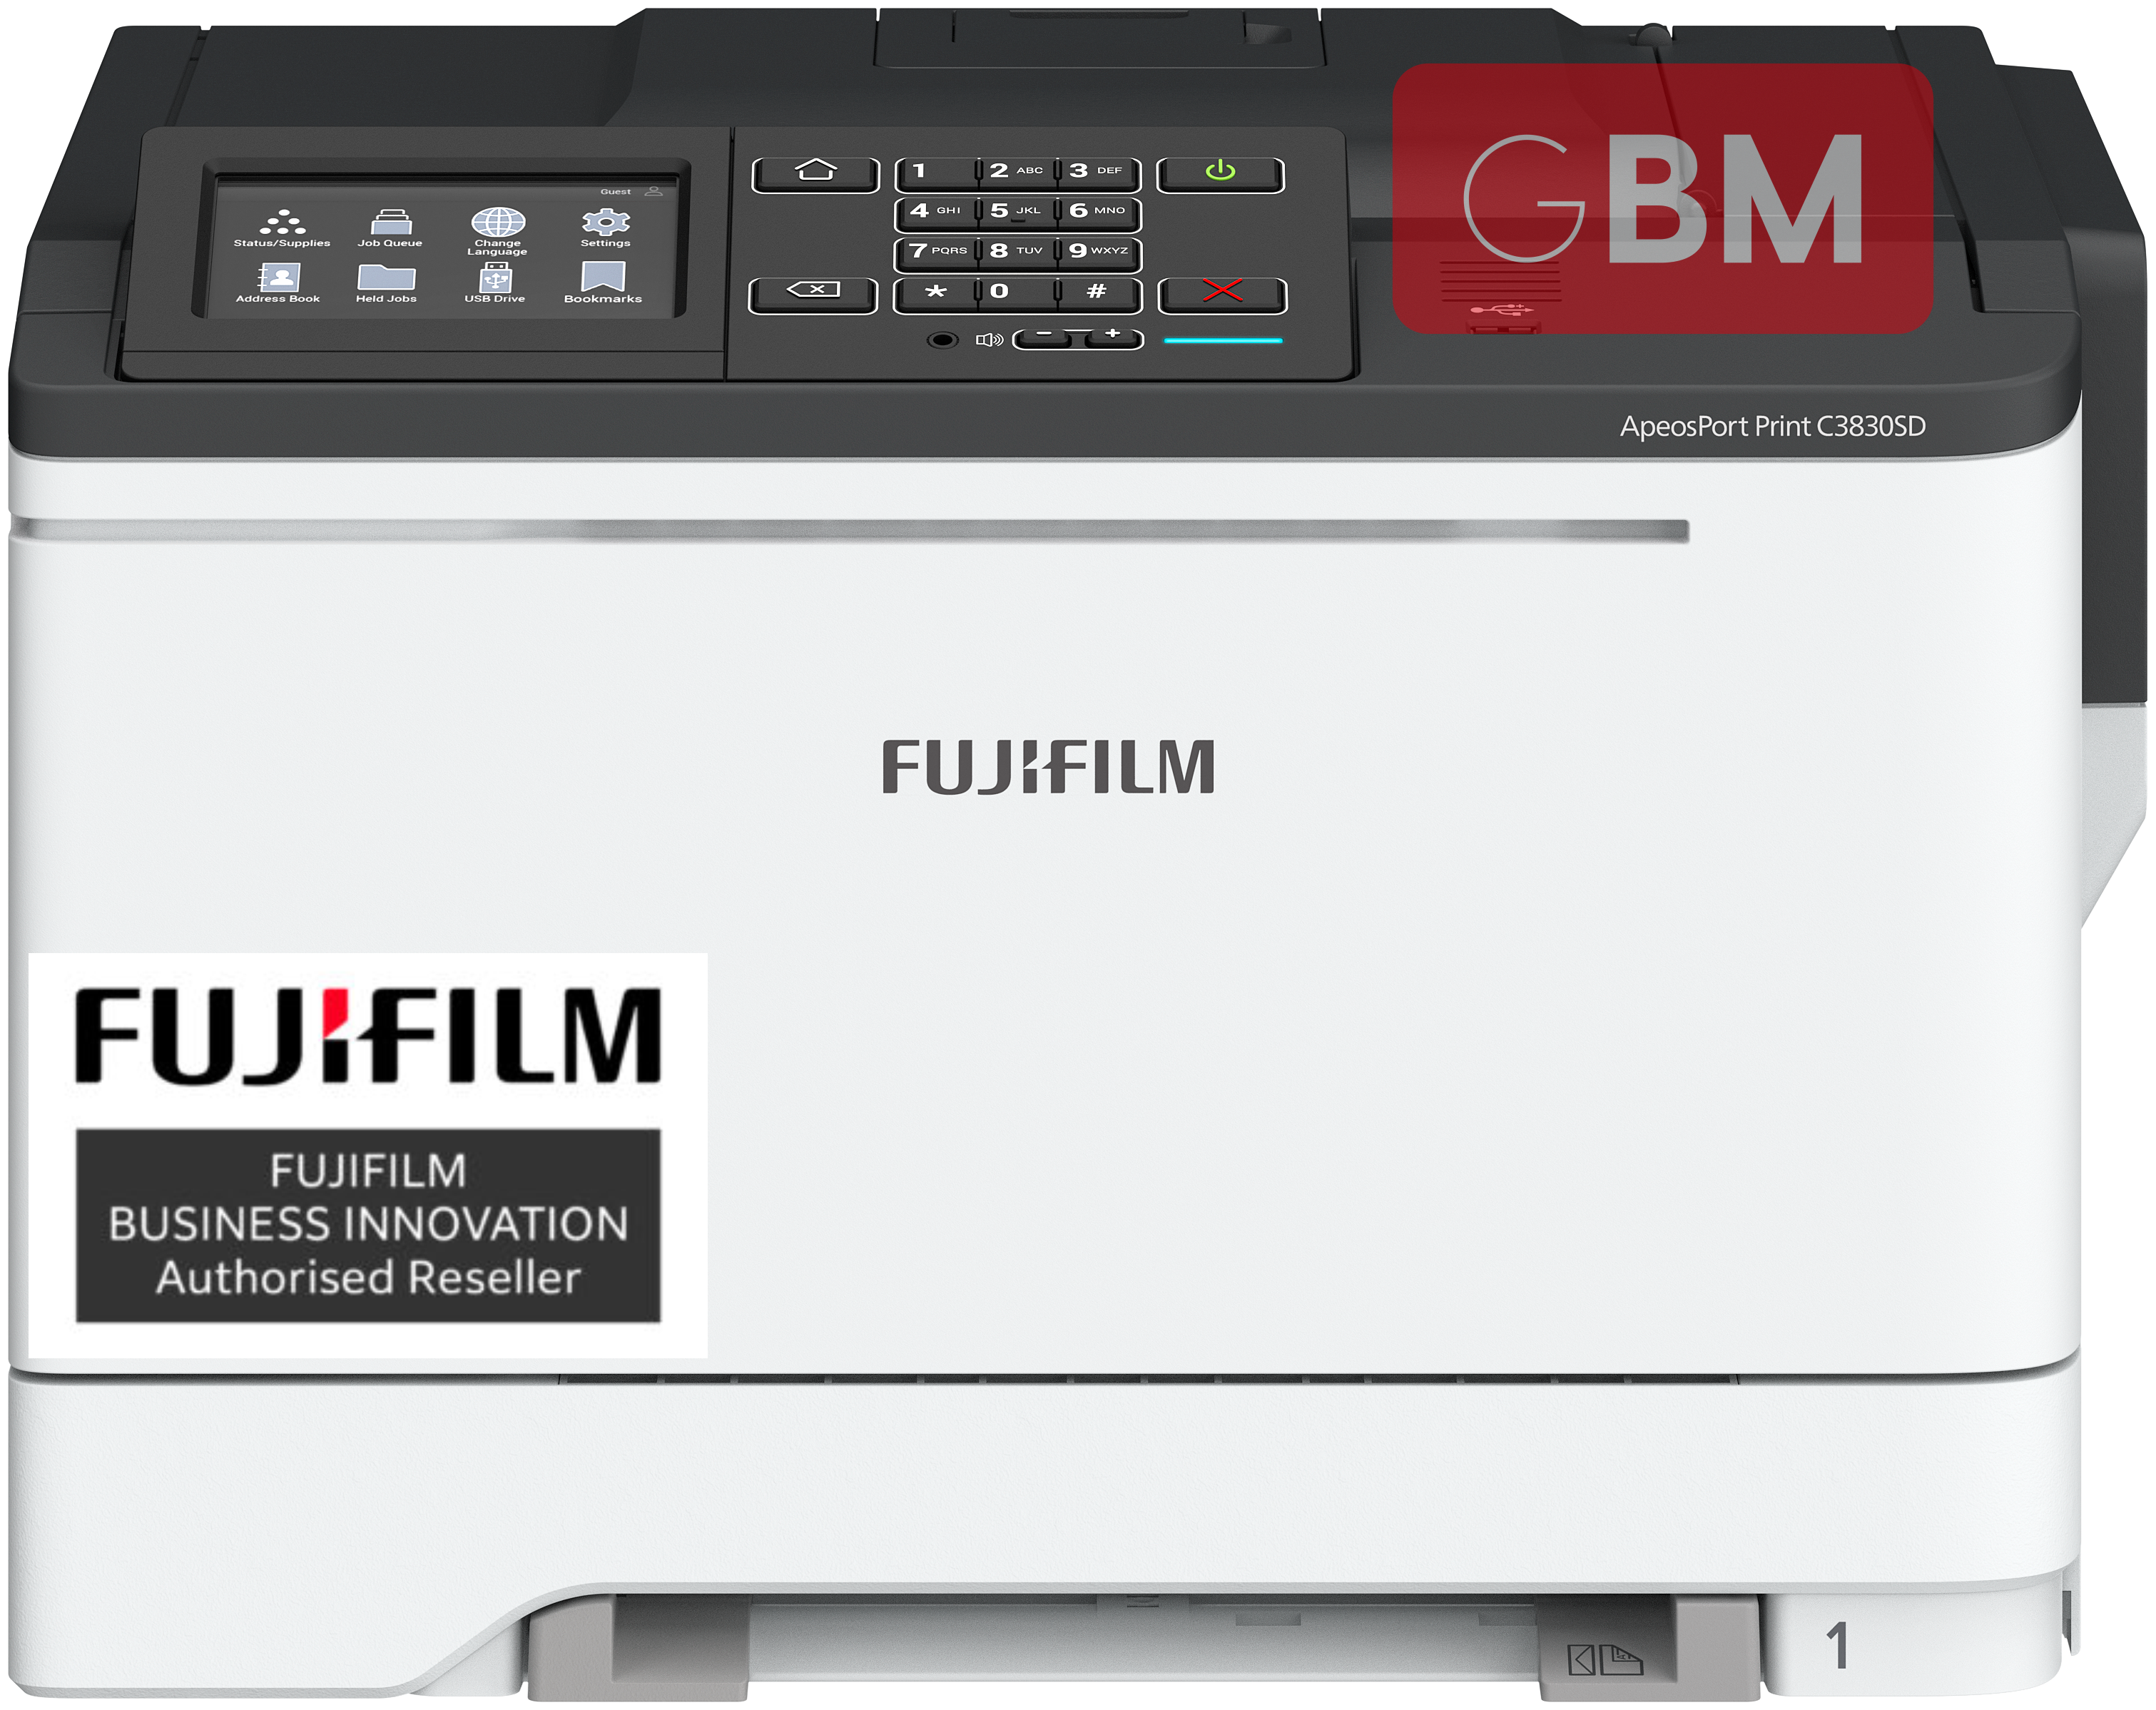 FUJIFILM ApeosPrint C3830SD A4 Colour Printer